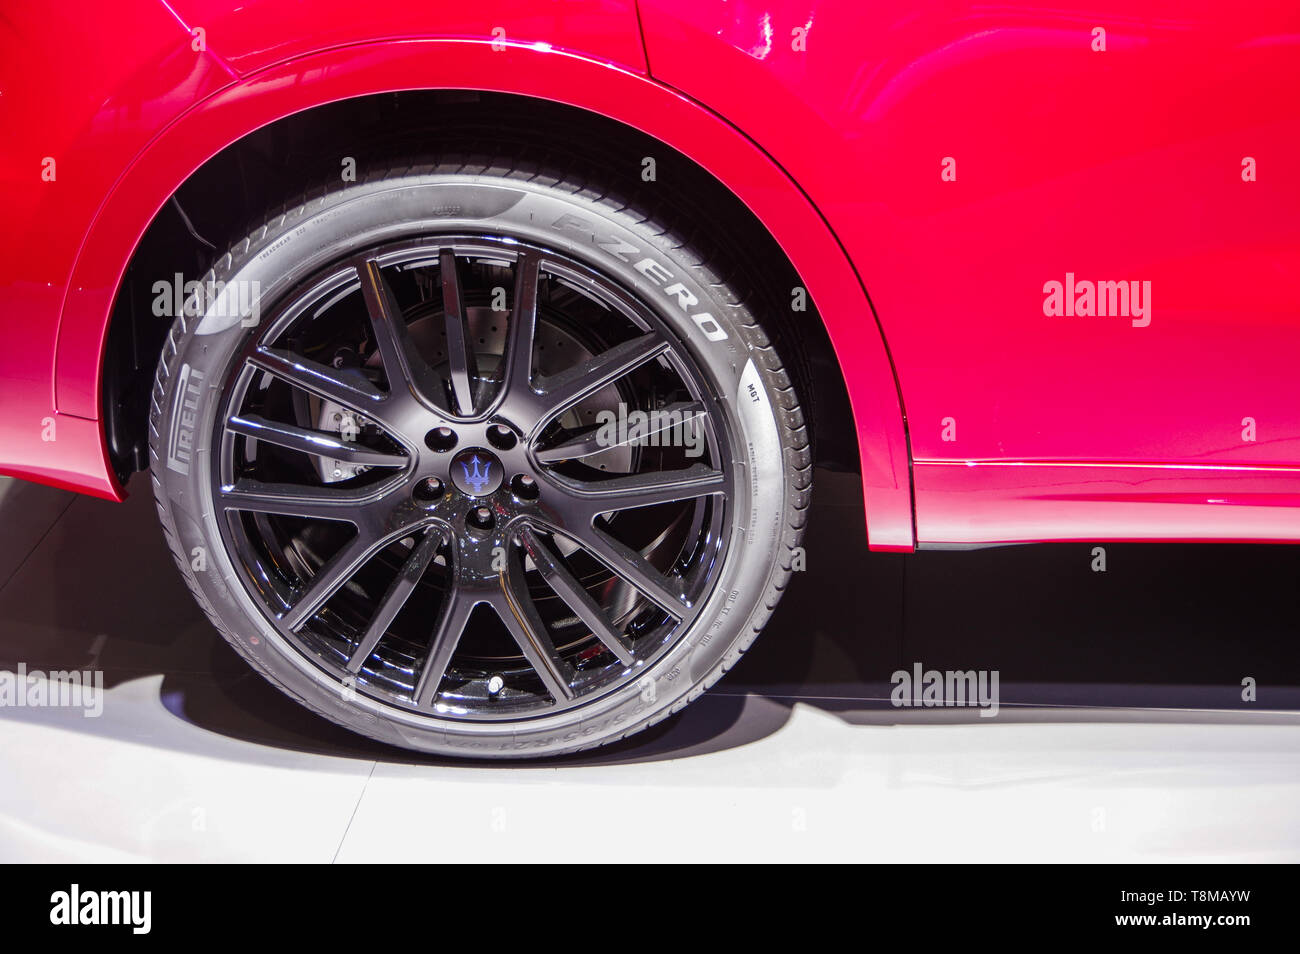 Red Maserati Levante Pirelli P Zero Reifen auf schwarz Radnabe  Stockfotografie - Alamy